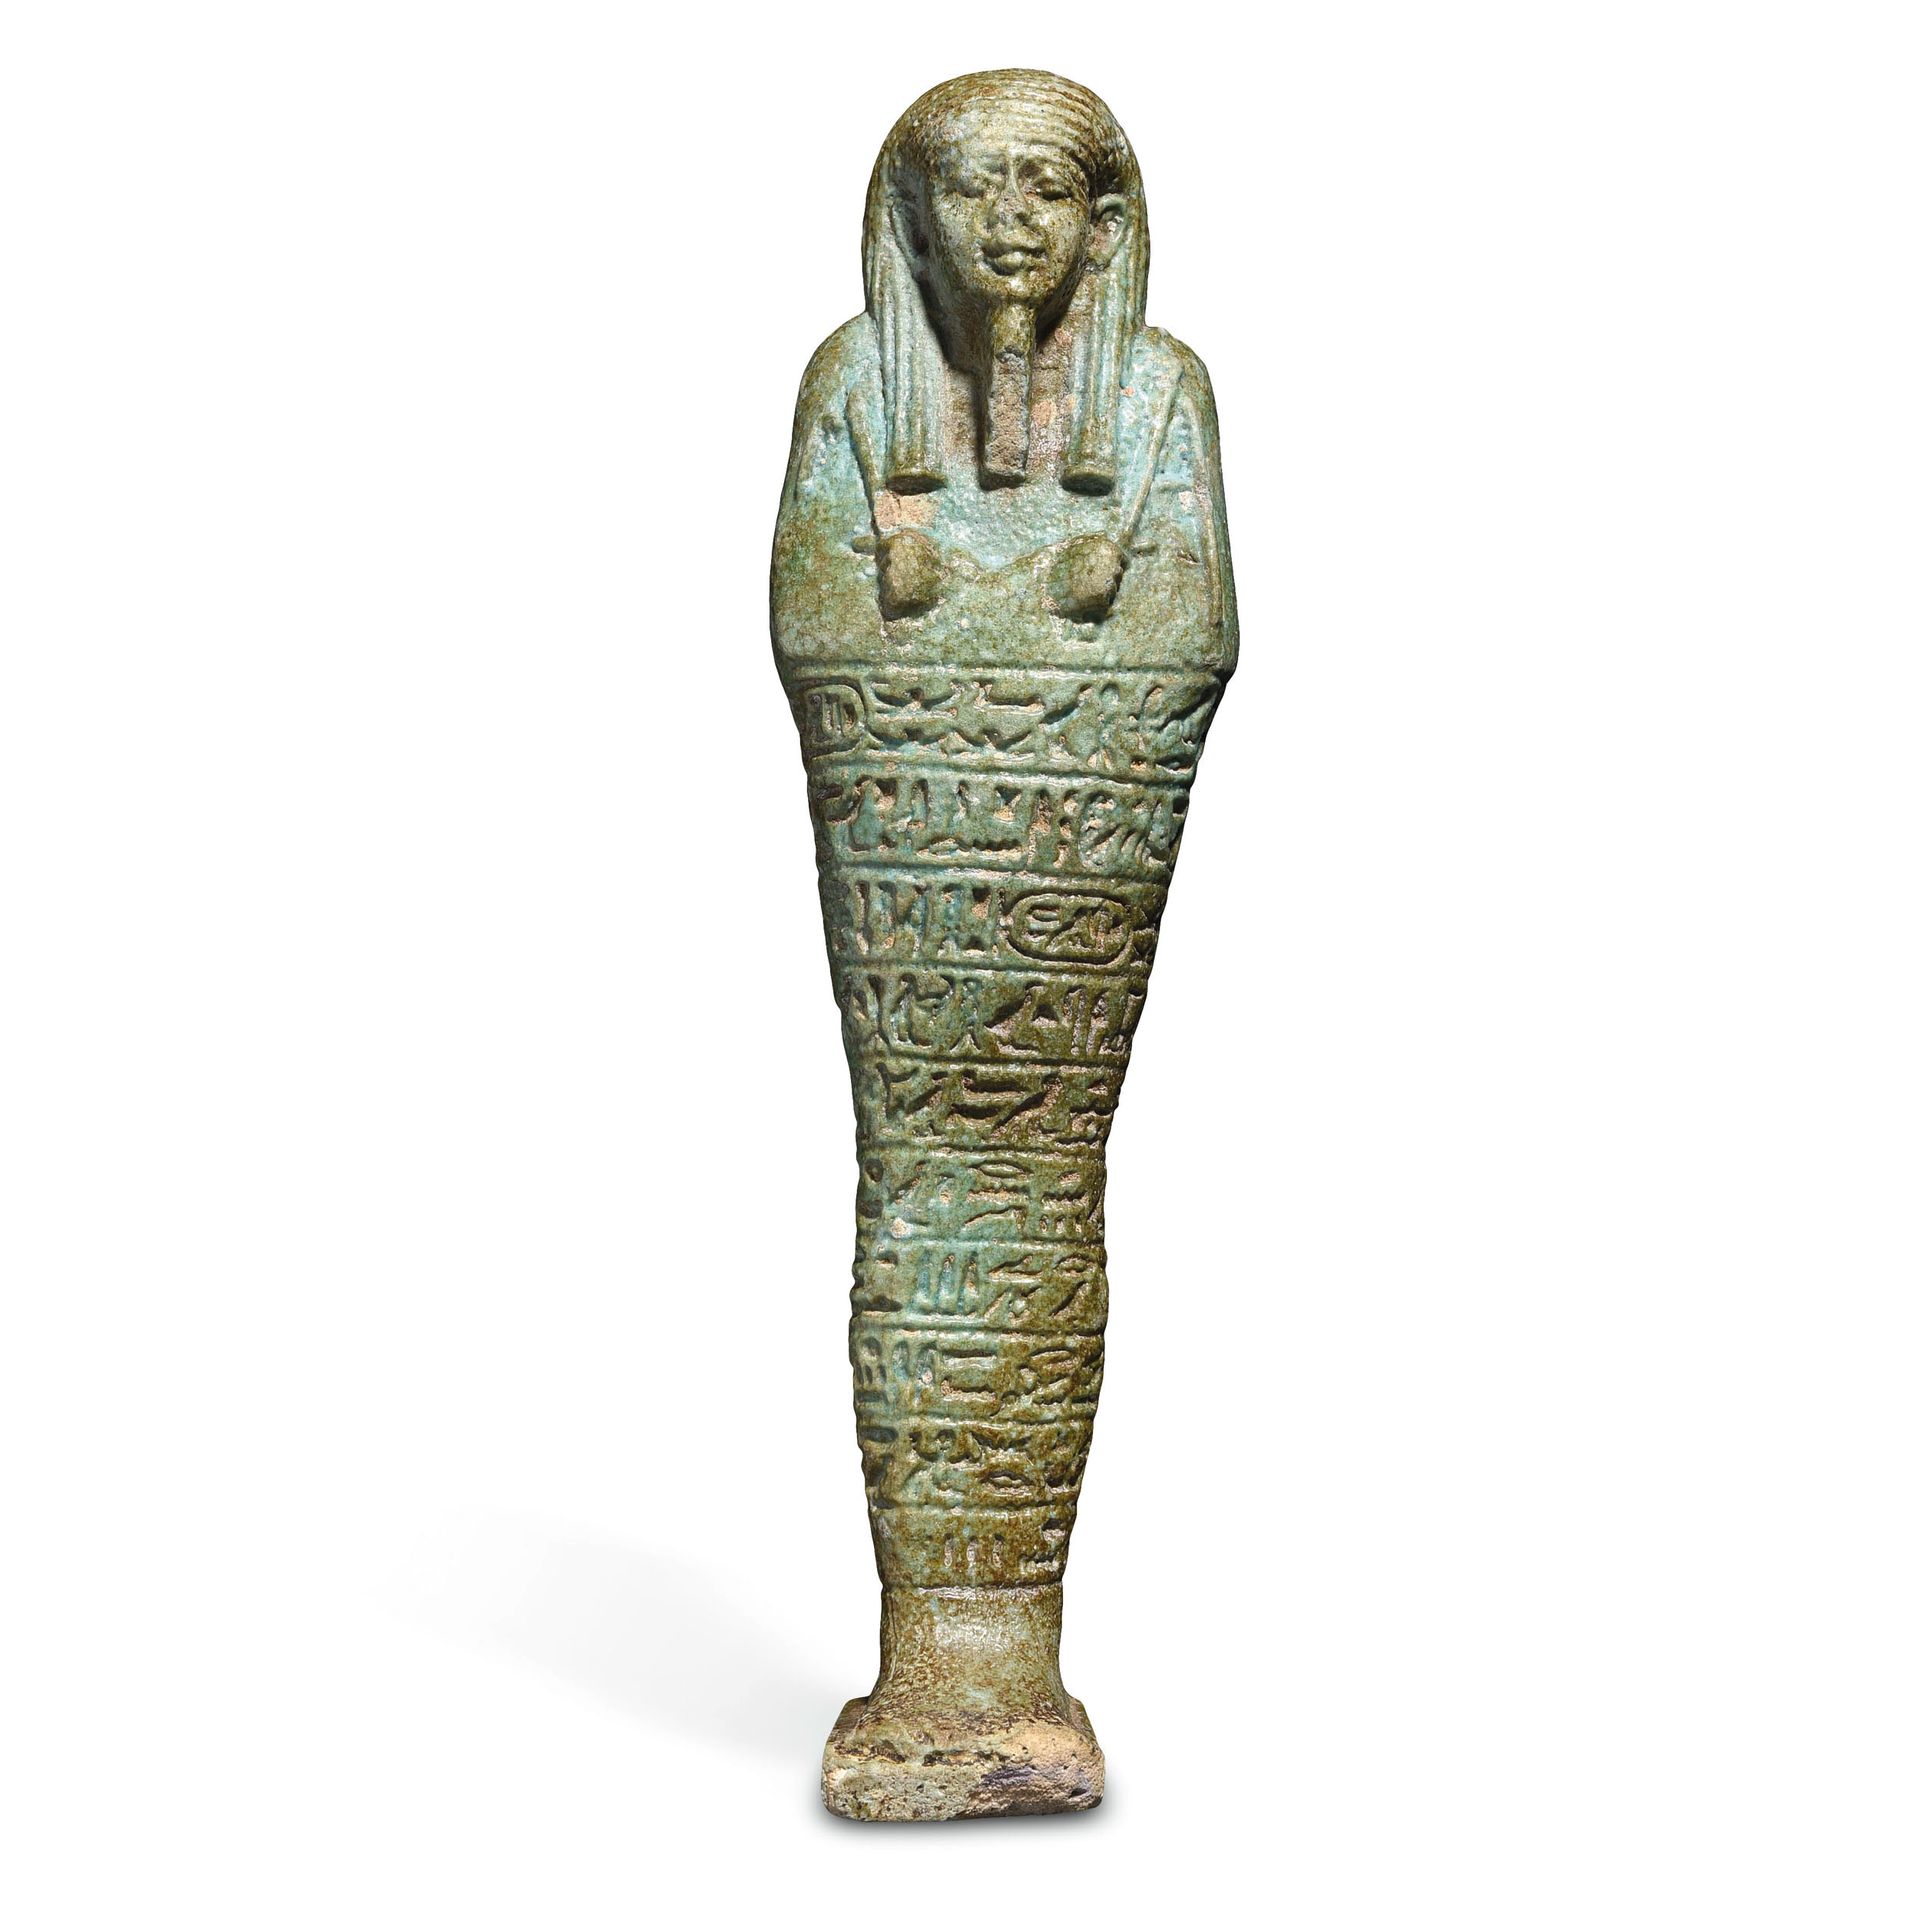 Null OUSHABTI AU NOM DE PSAMMÉTIQUE

Egypte, XXVIe dynastie, 664-525 av. J.-C.

&hellip;